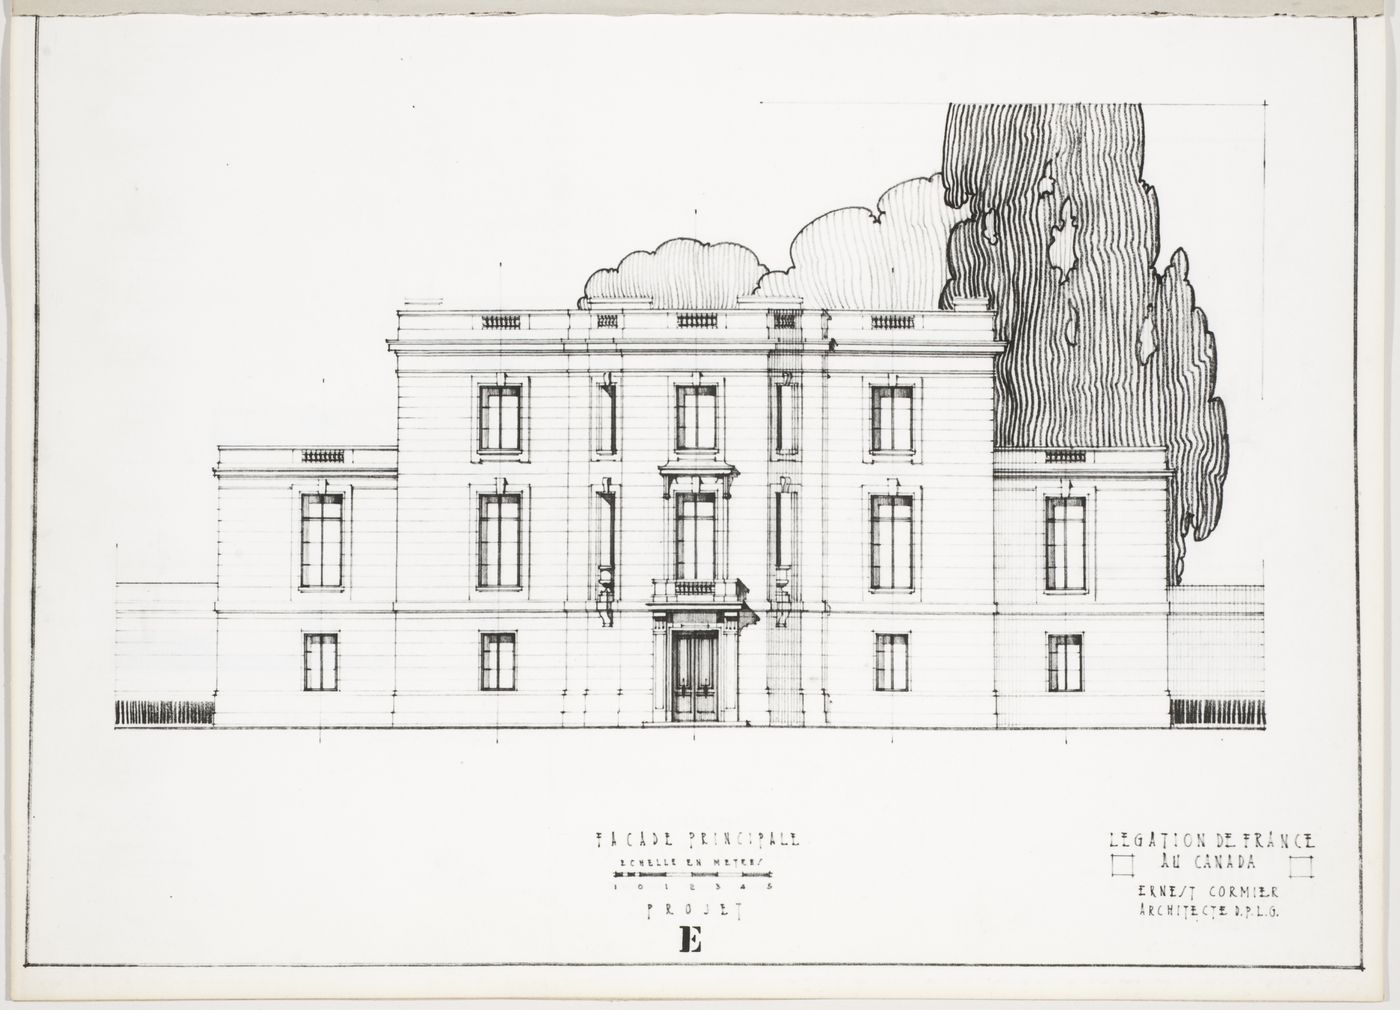 Élévation de la façade principale, Légation de France au Canada, Ottawa, Canada (1932, 1936)